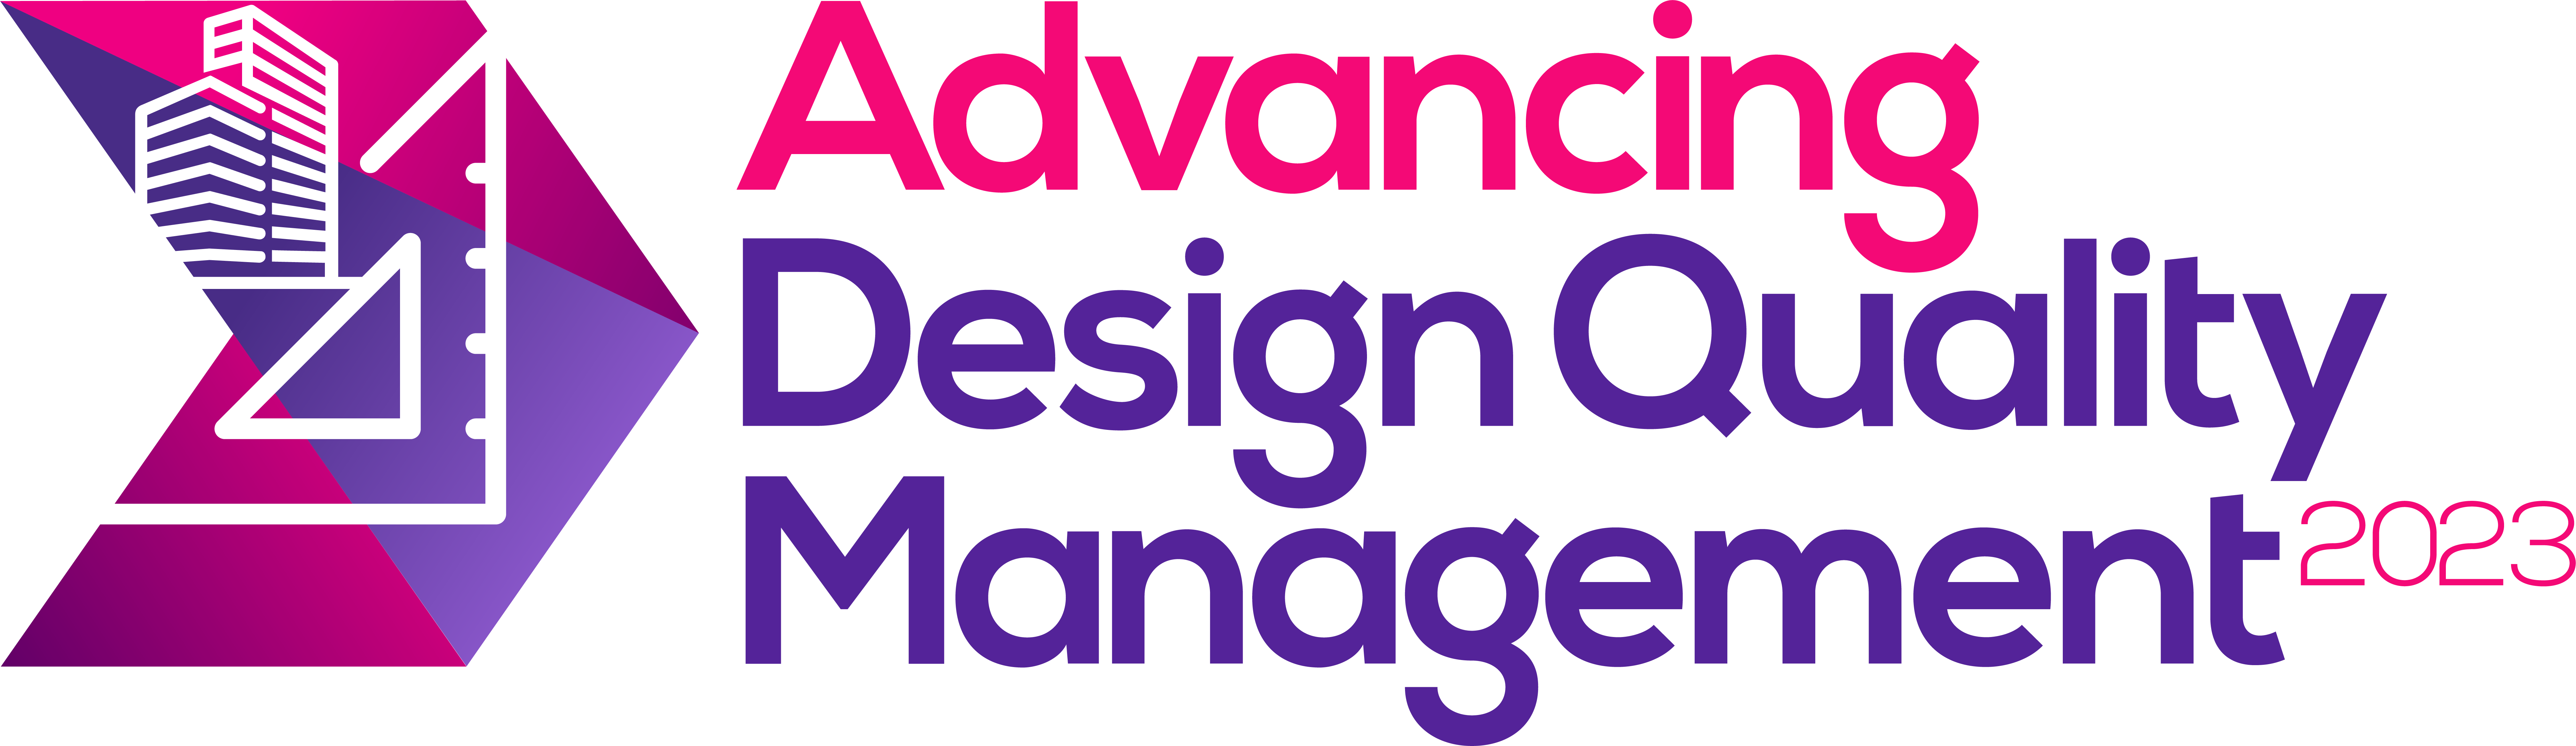 Advancing Design Quality Management 2023 Logo